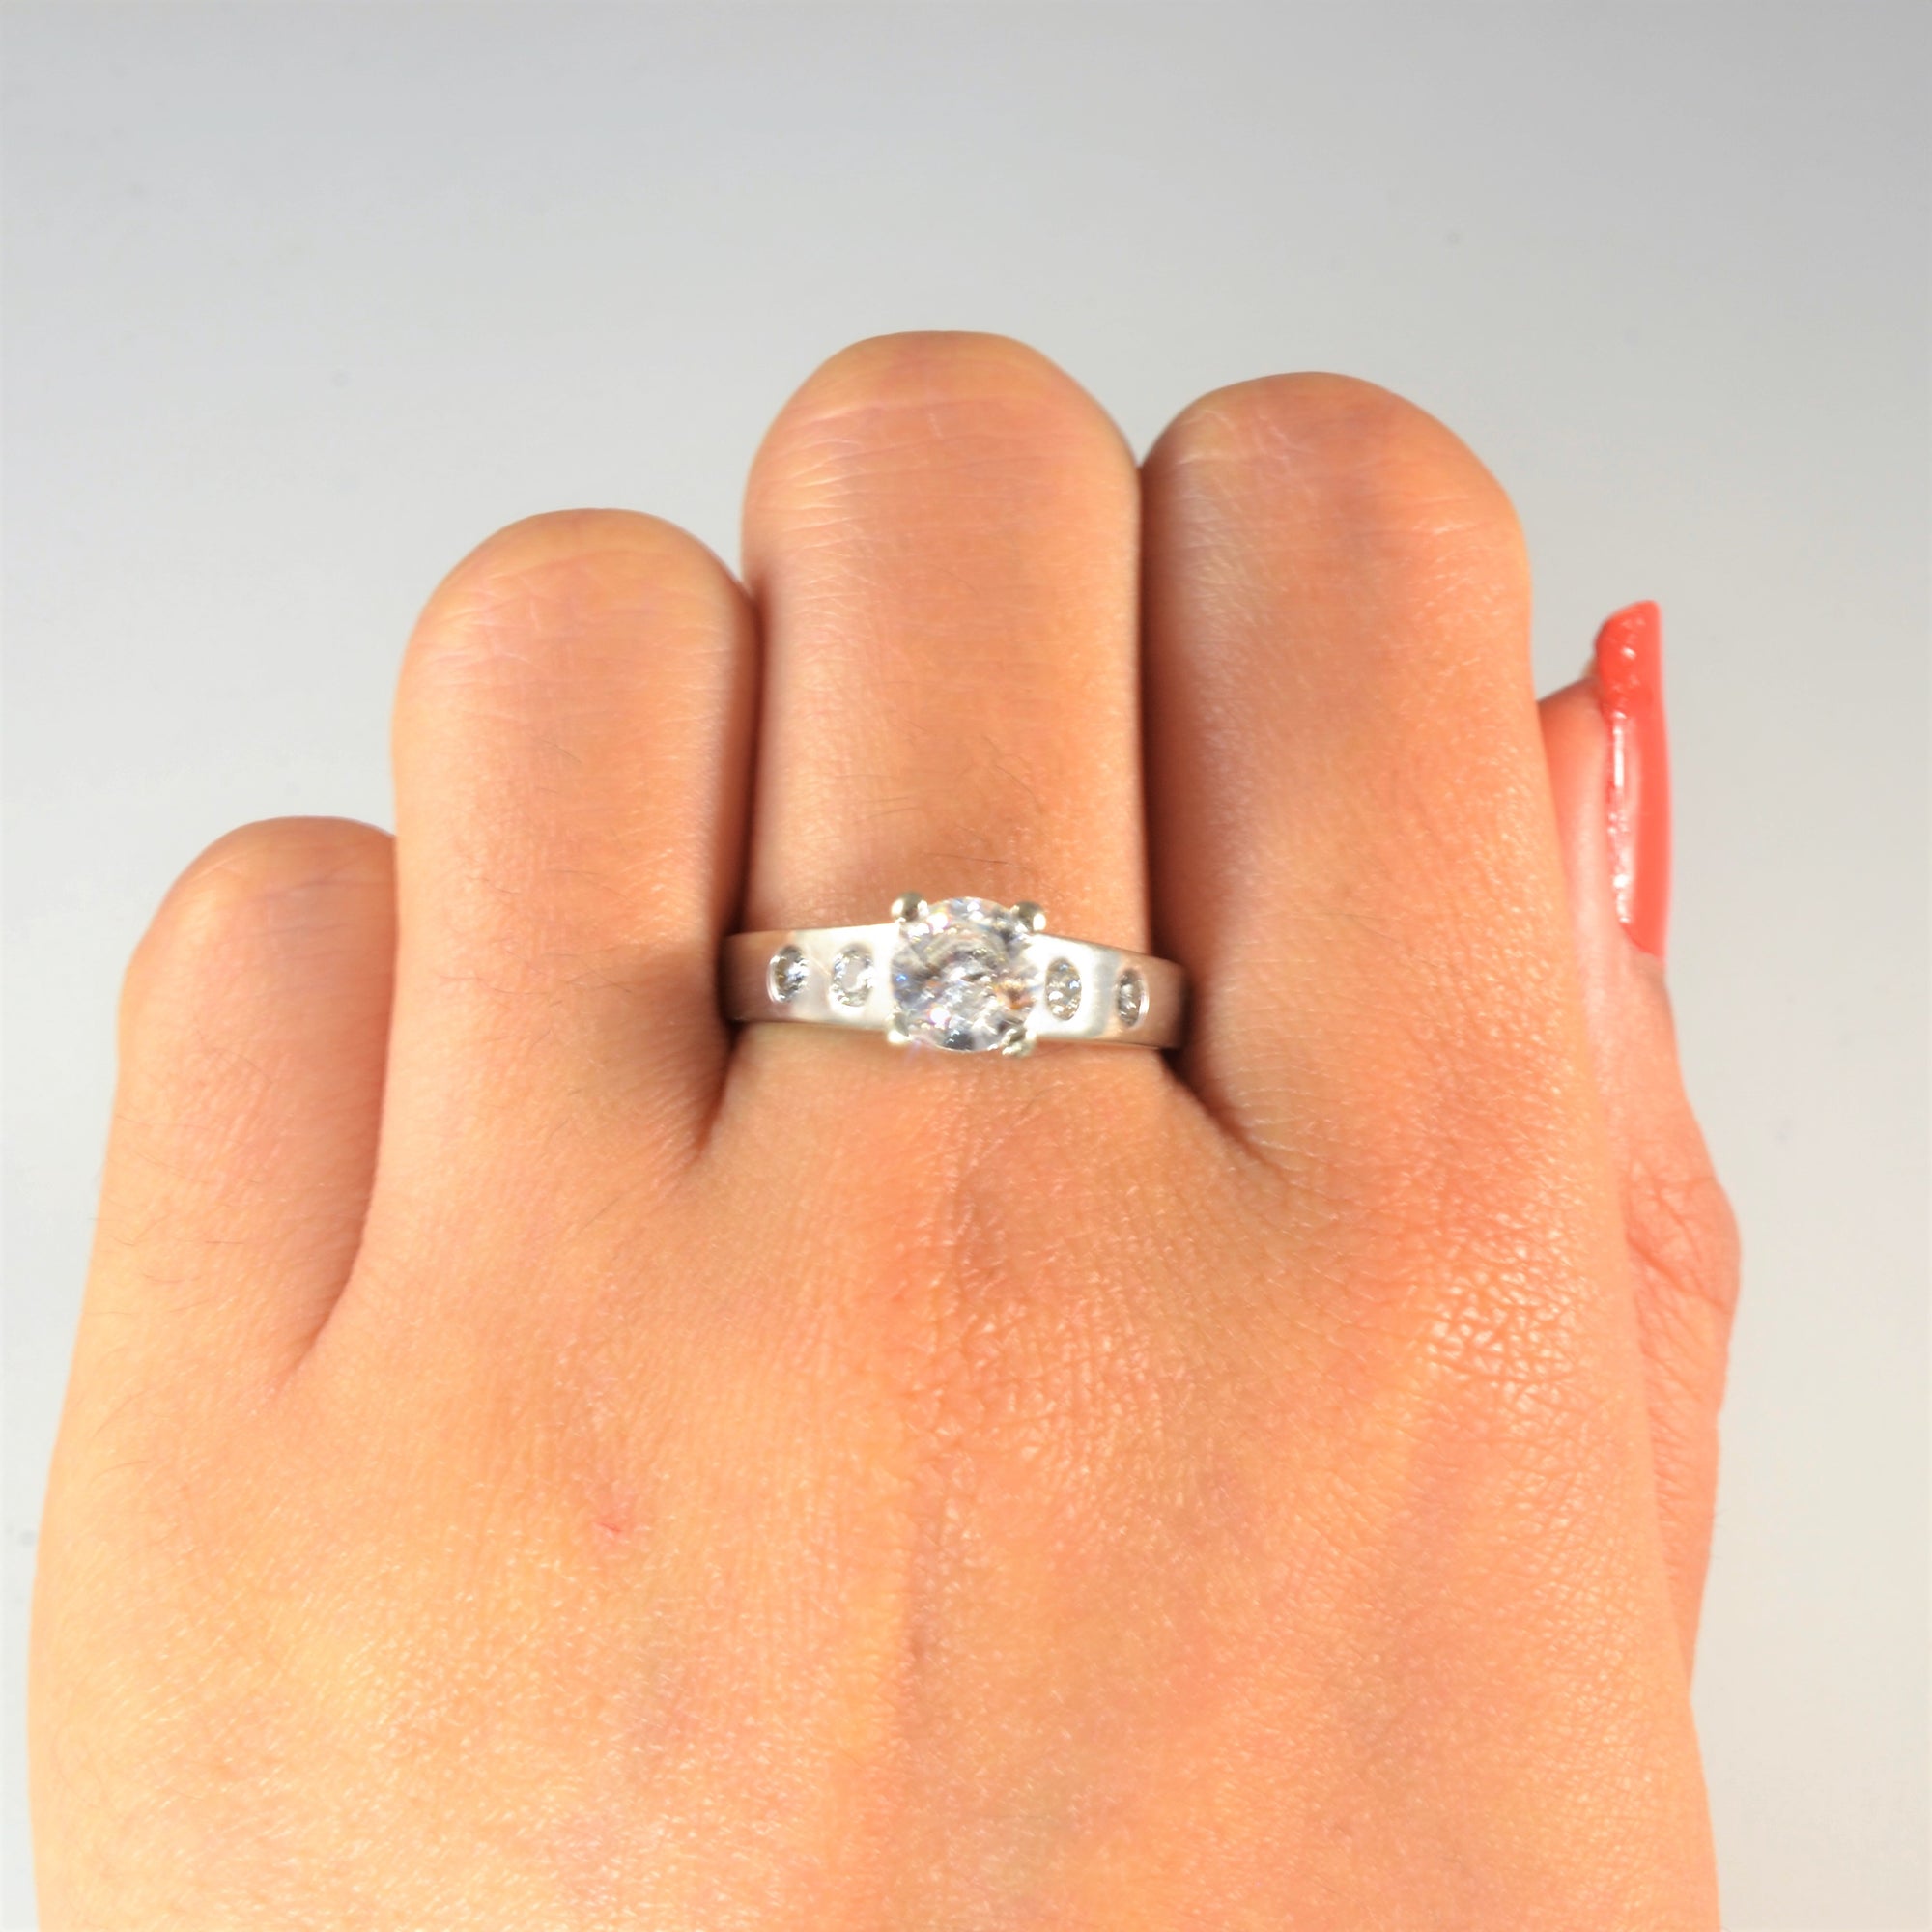 Gypsy Detailed Diamond Engagement Ring | 1.24ctw | SZ 8.75 |